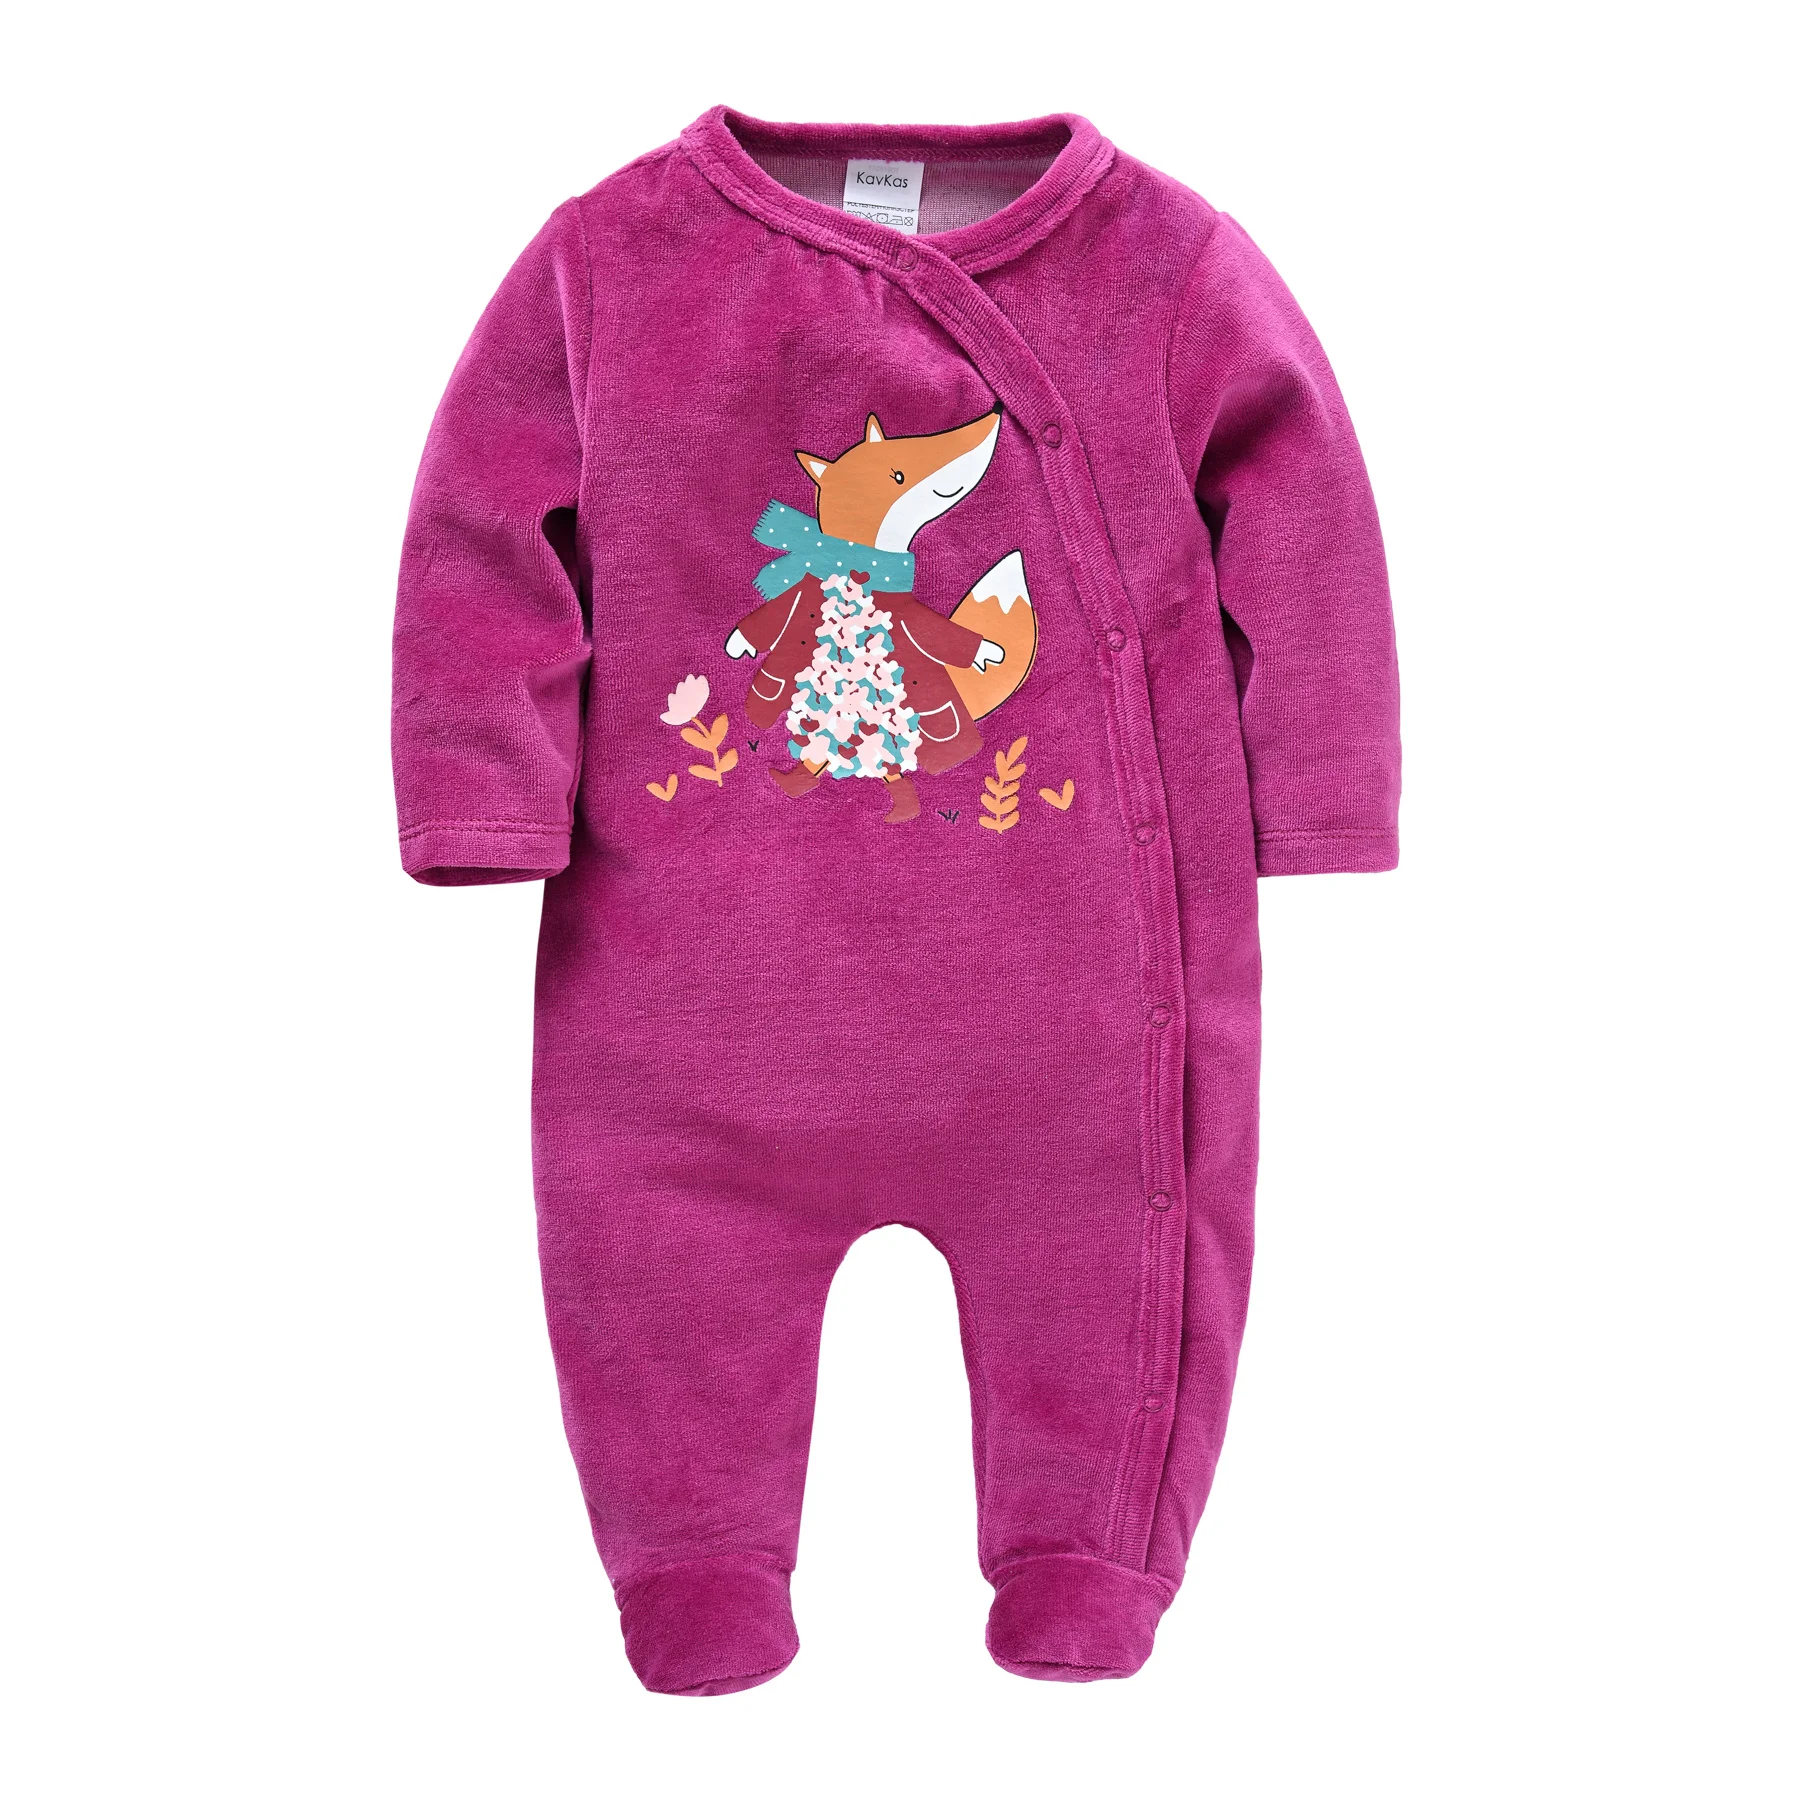 

Honeyzone Newborn Baby Girl Clothes 0 3 Months Neonato Pijamas Bebe Recien Nacido Fox Print Baby Rompers Cotton Infant Jumpsuits